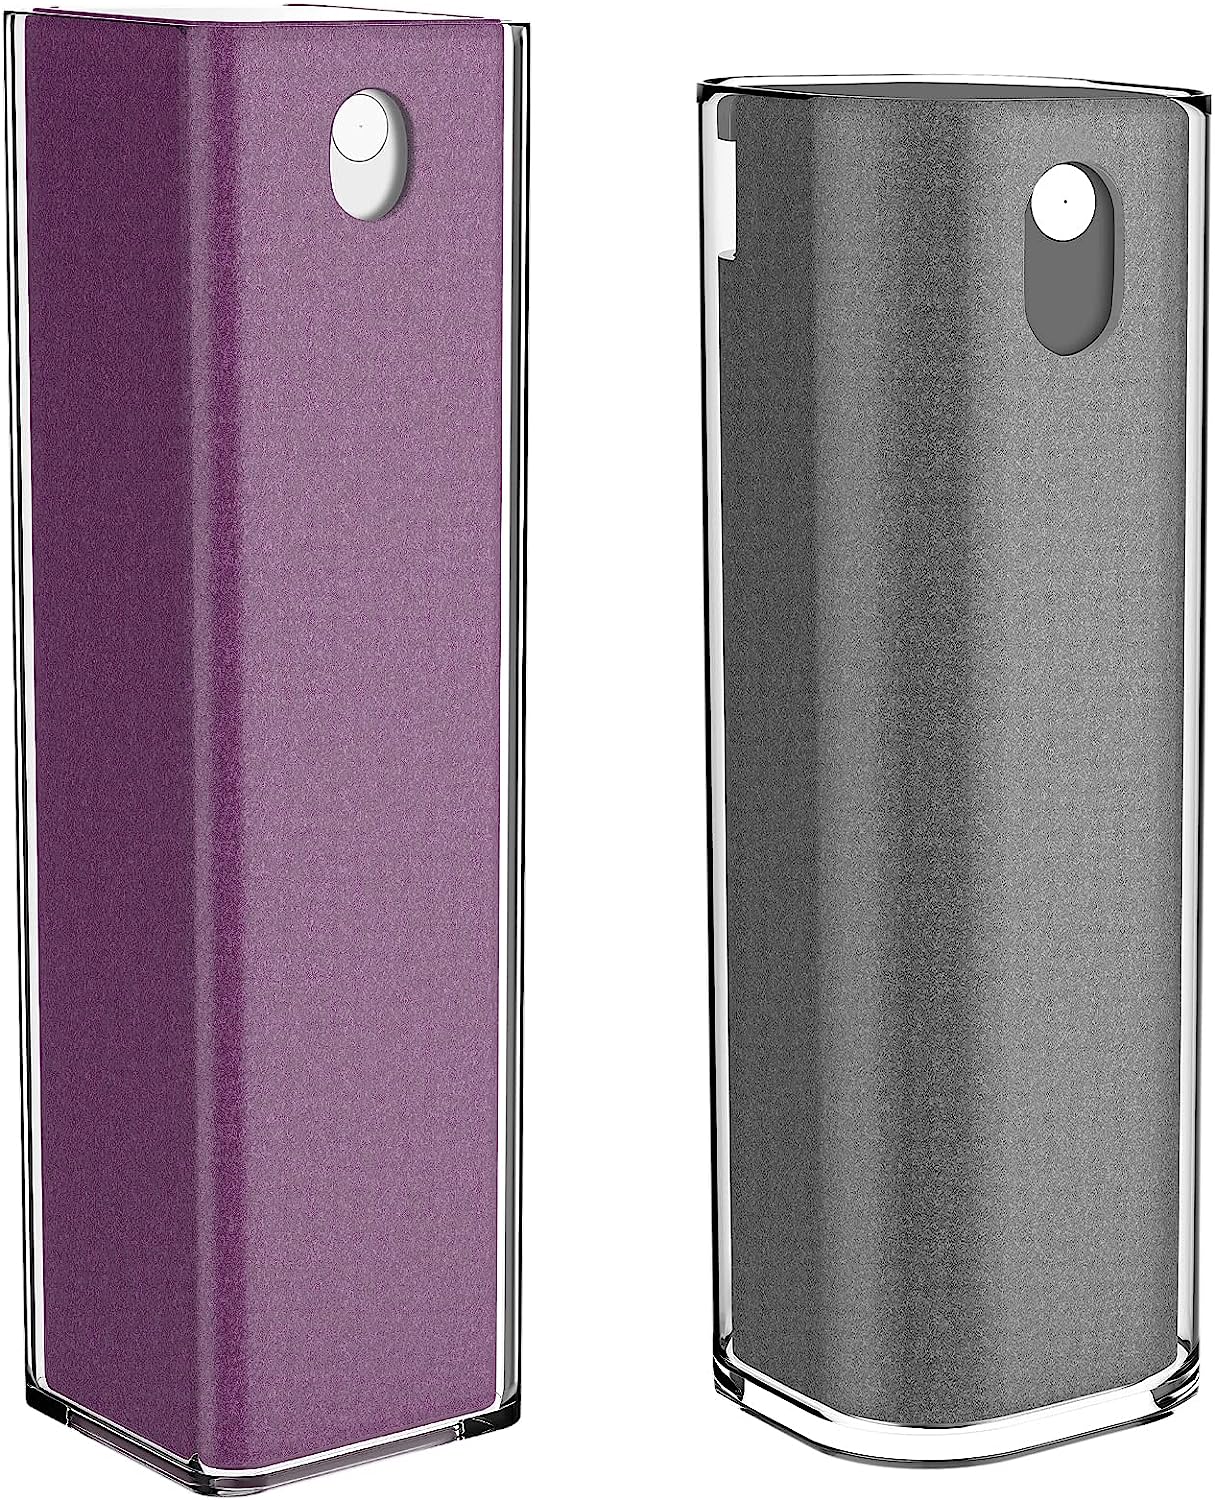 Hoopliee 3-in-1 Screen Cleaner (Gray+Purple)" - havana shop